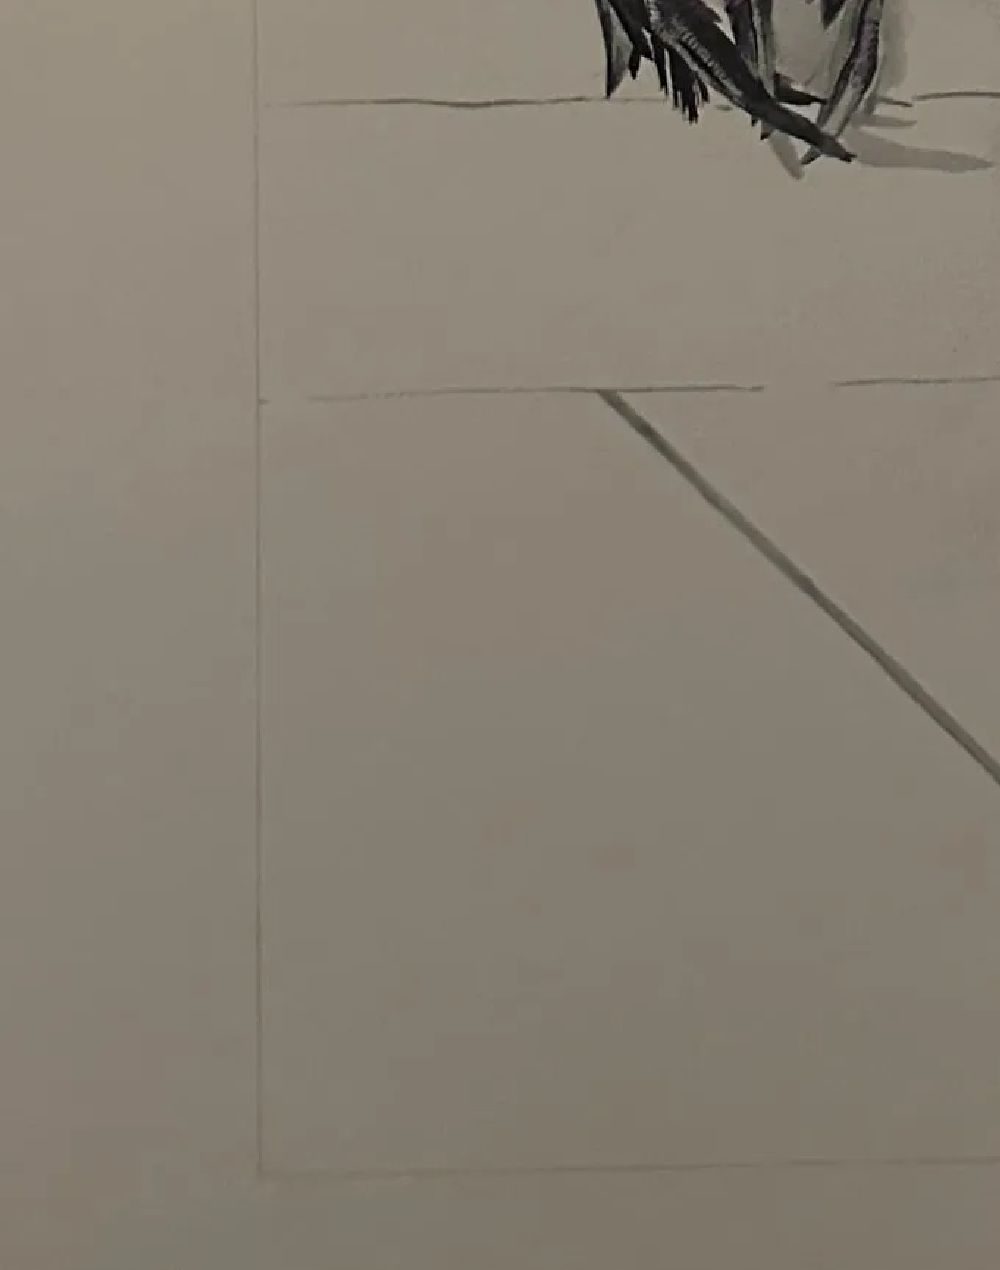 Jamie Wyeth "Untitled" Print - Image 2 of 5